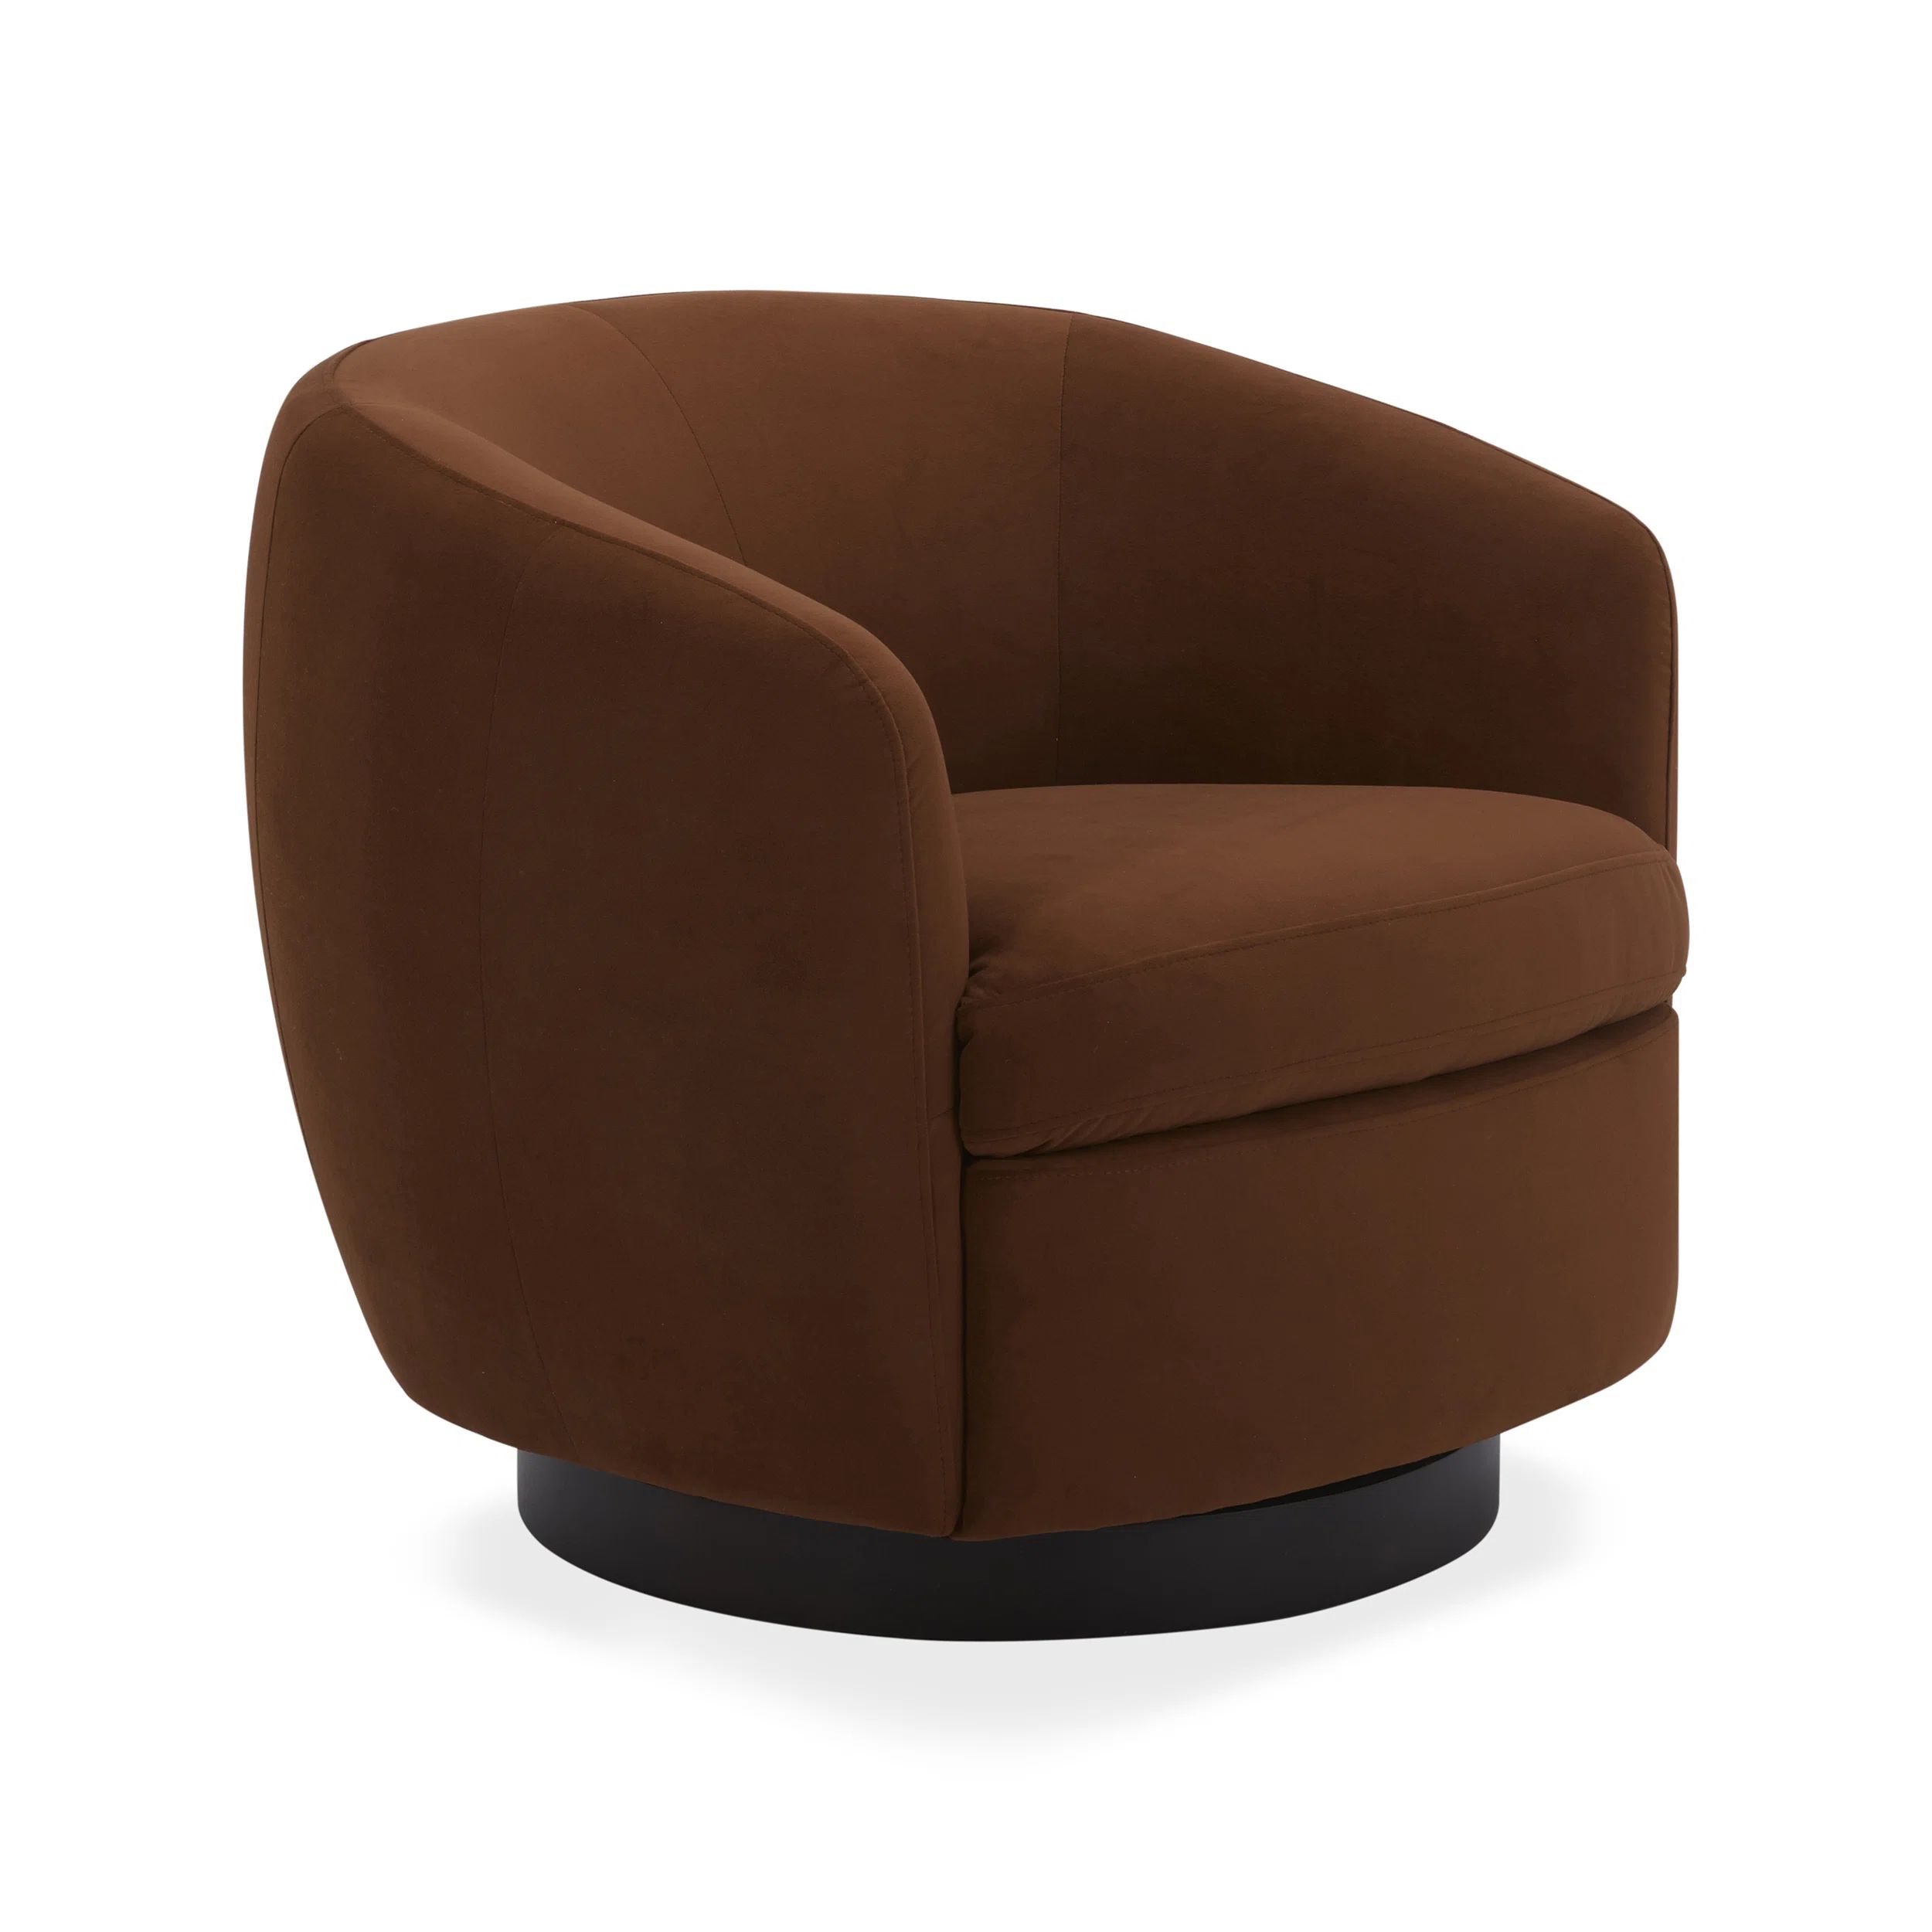 Marcy Upholstered Swivel Barrel Chair | Wayfair North America